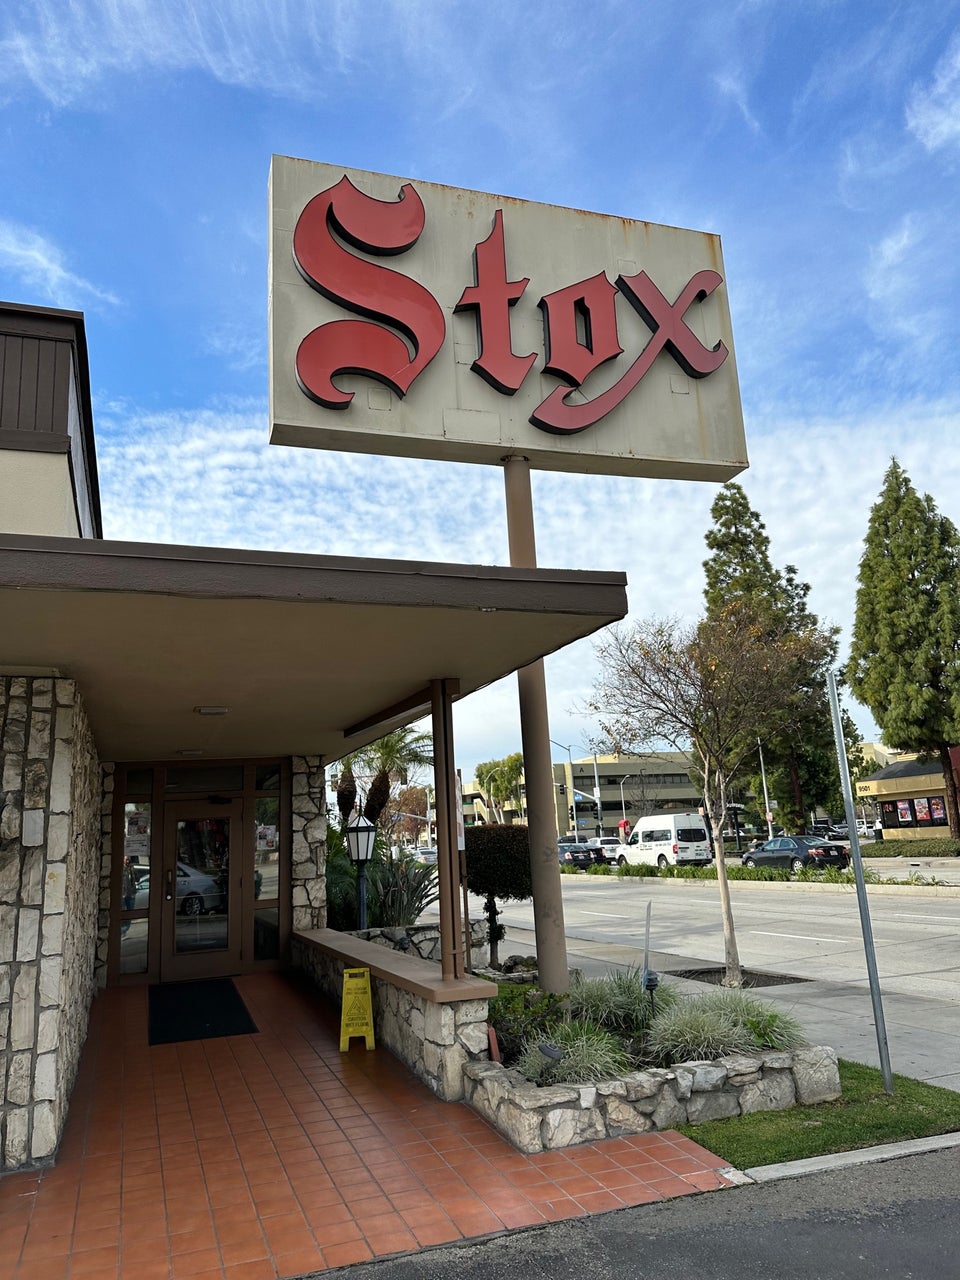 Stox Restaurant Bakery & Bar